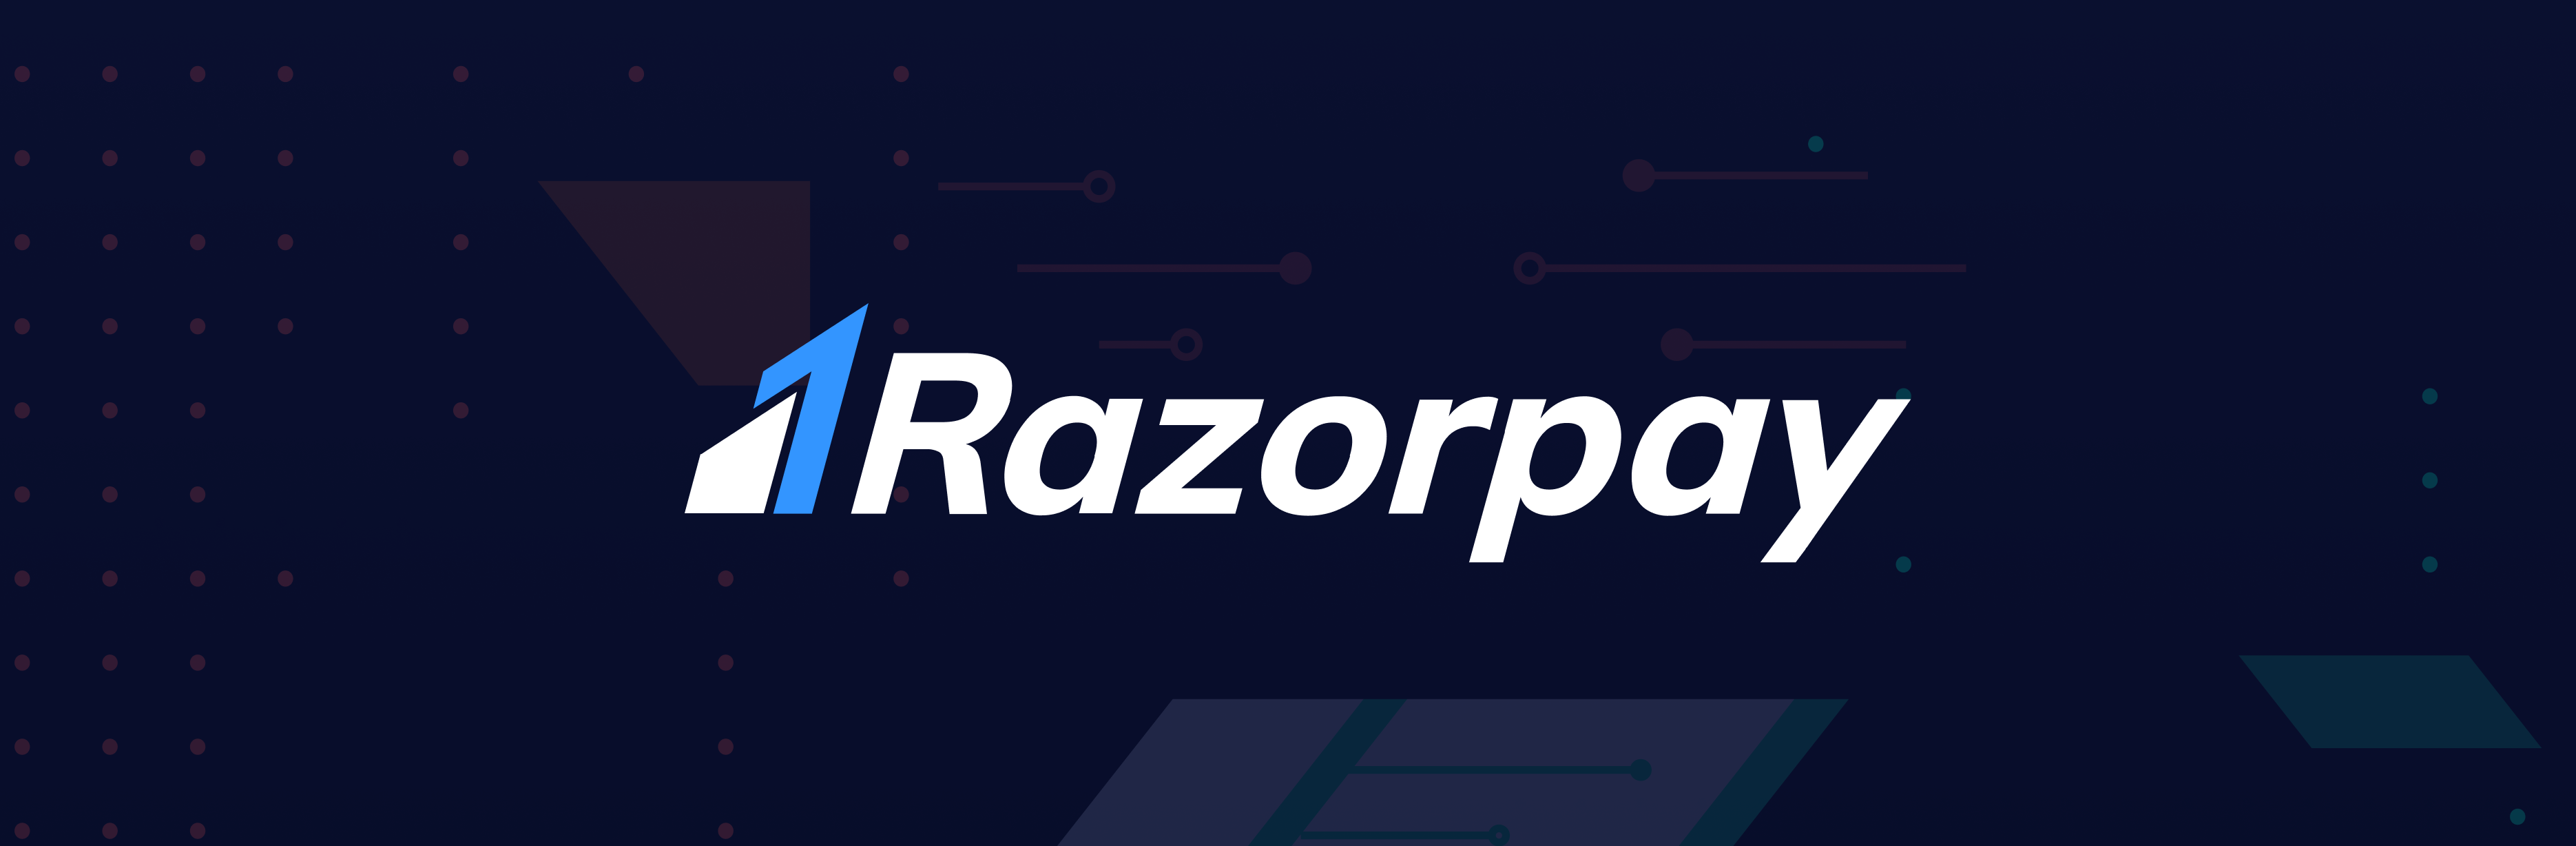 Razorpay Recruitment